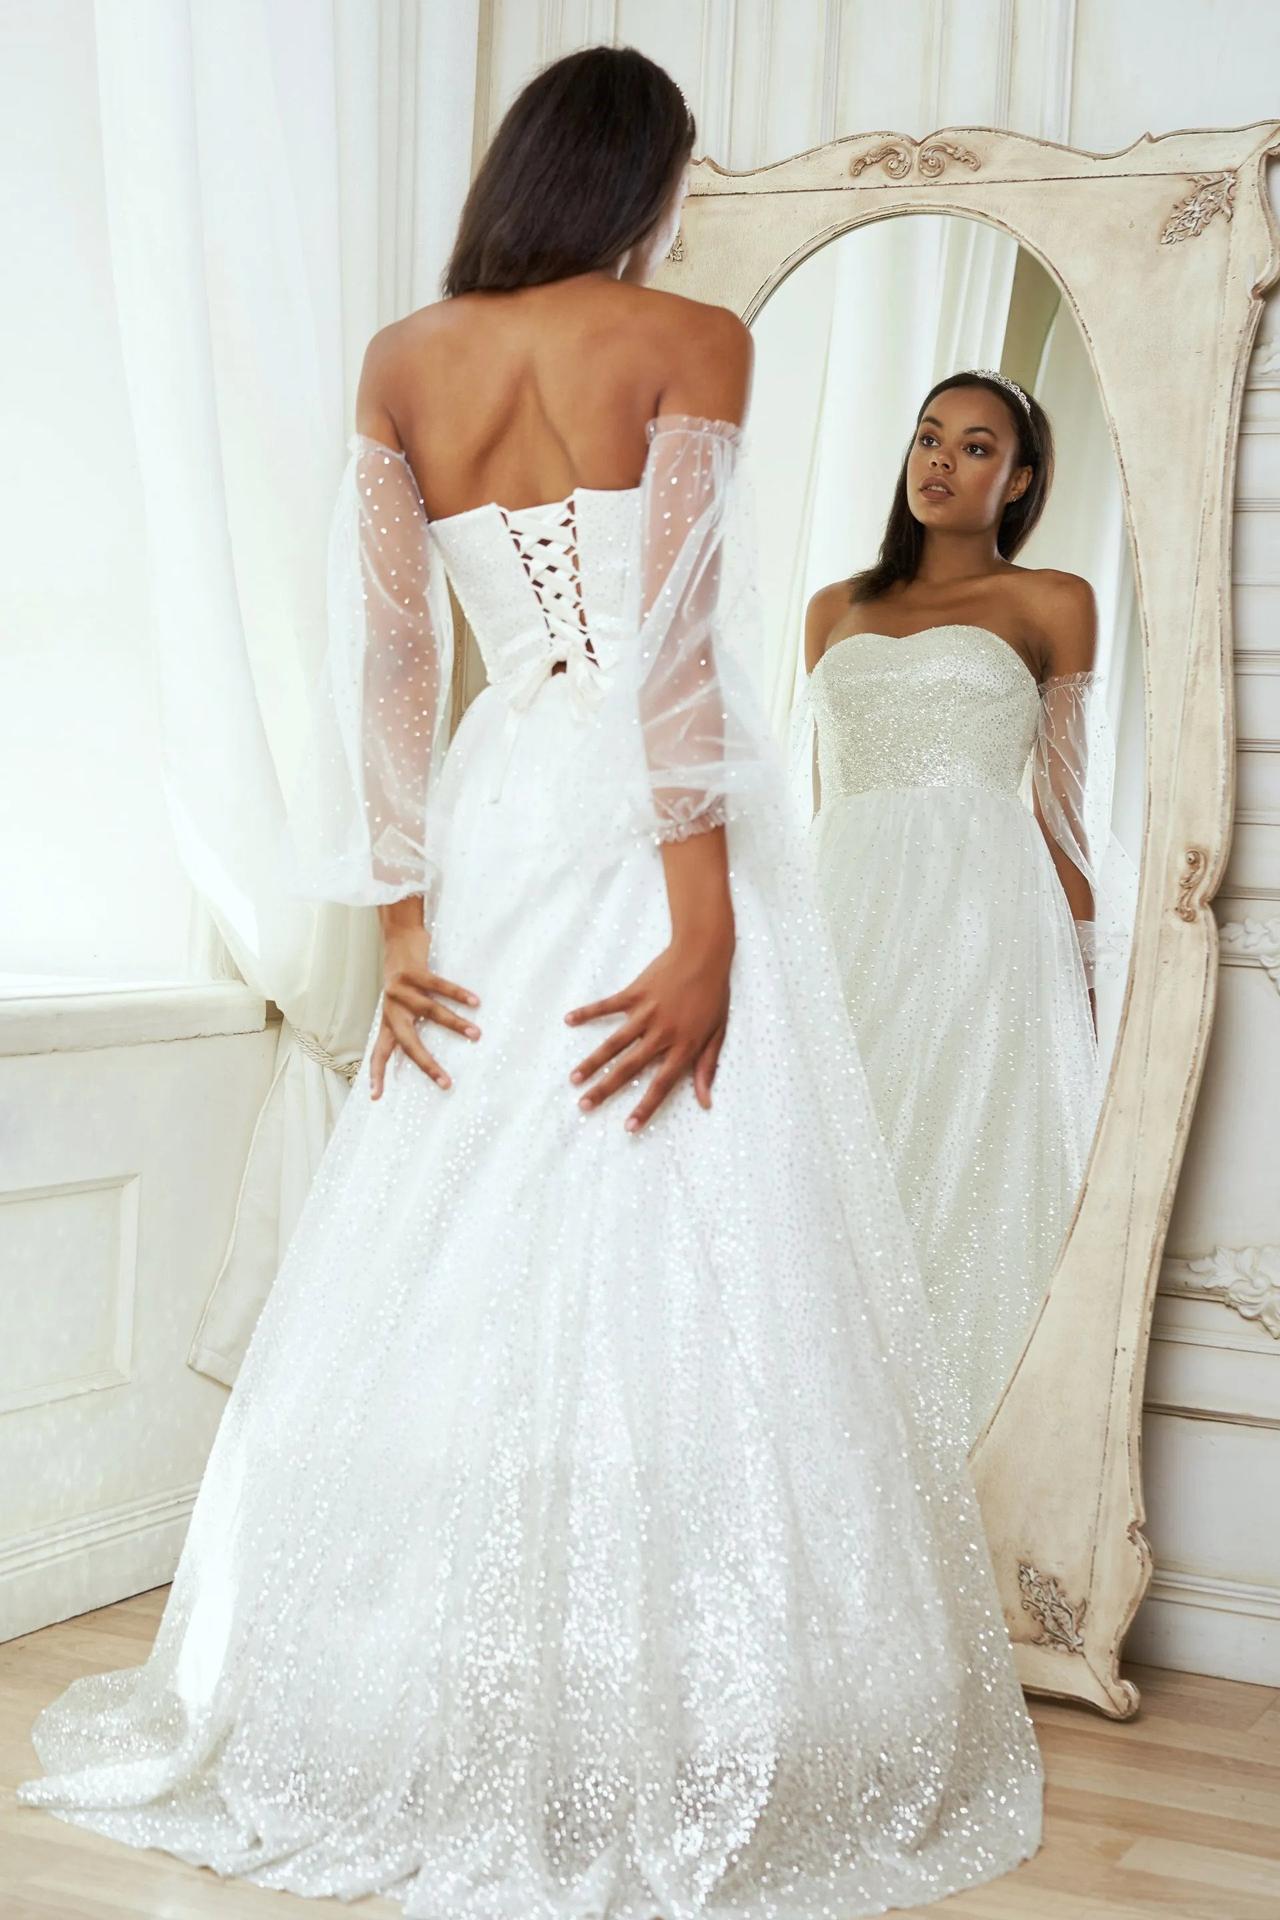 Rental bridal gowns grey Online Poster A2 Template - VistaCreate